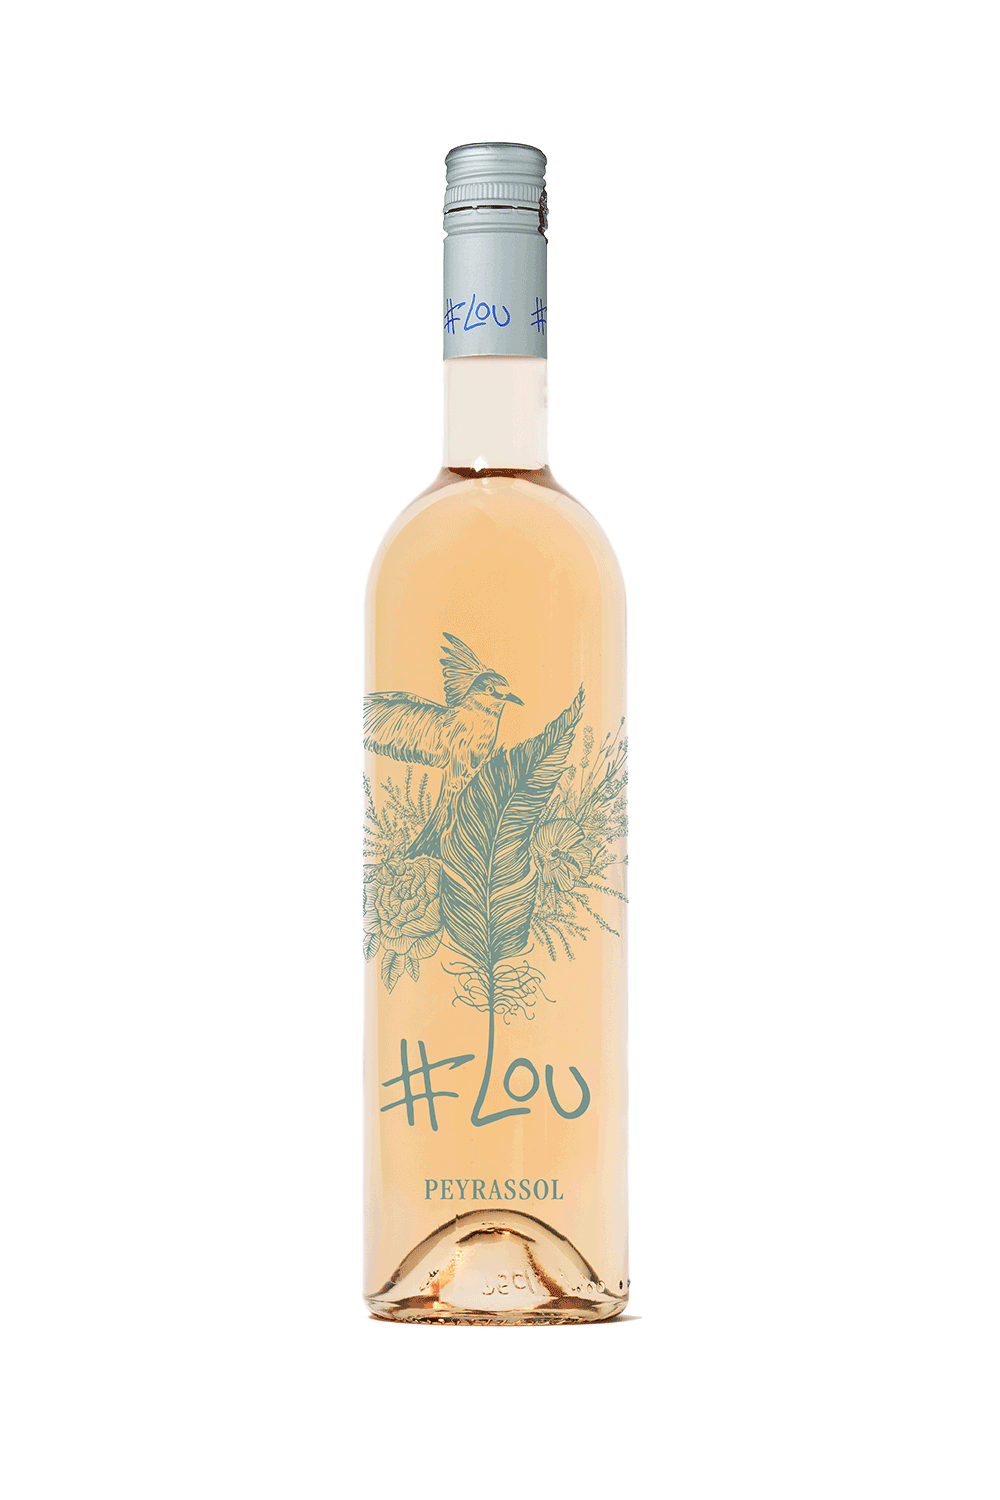 #LOU par Peyrassol, vin de marque de Provence produite par Peyrassol